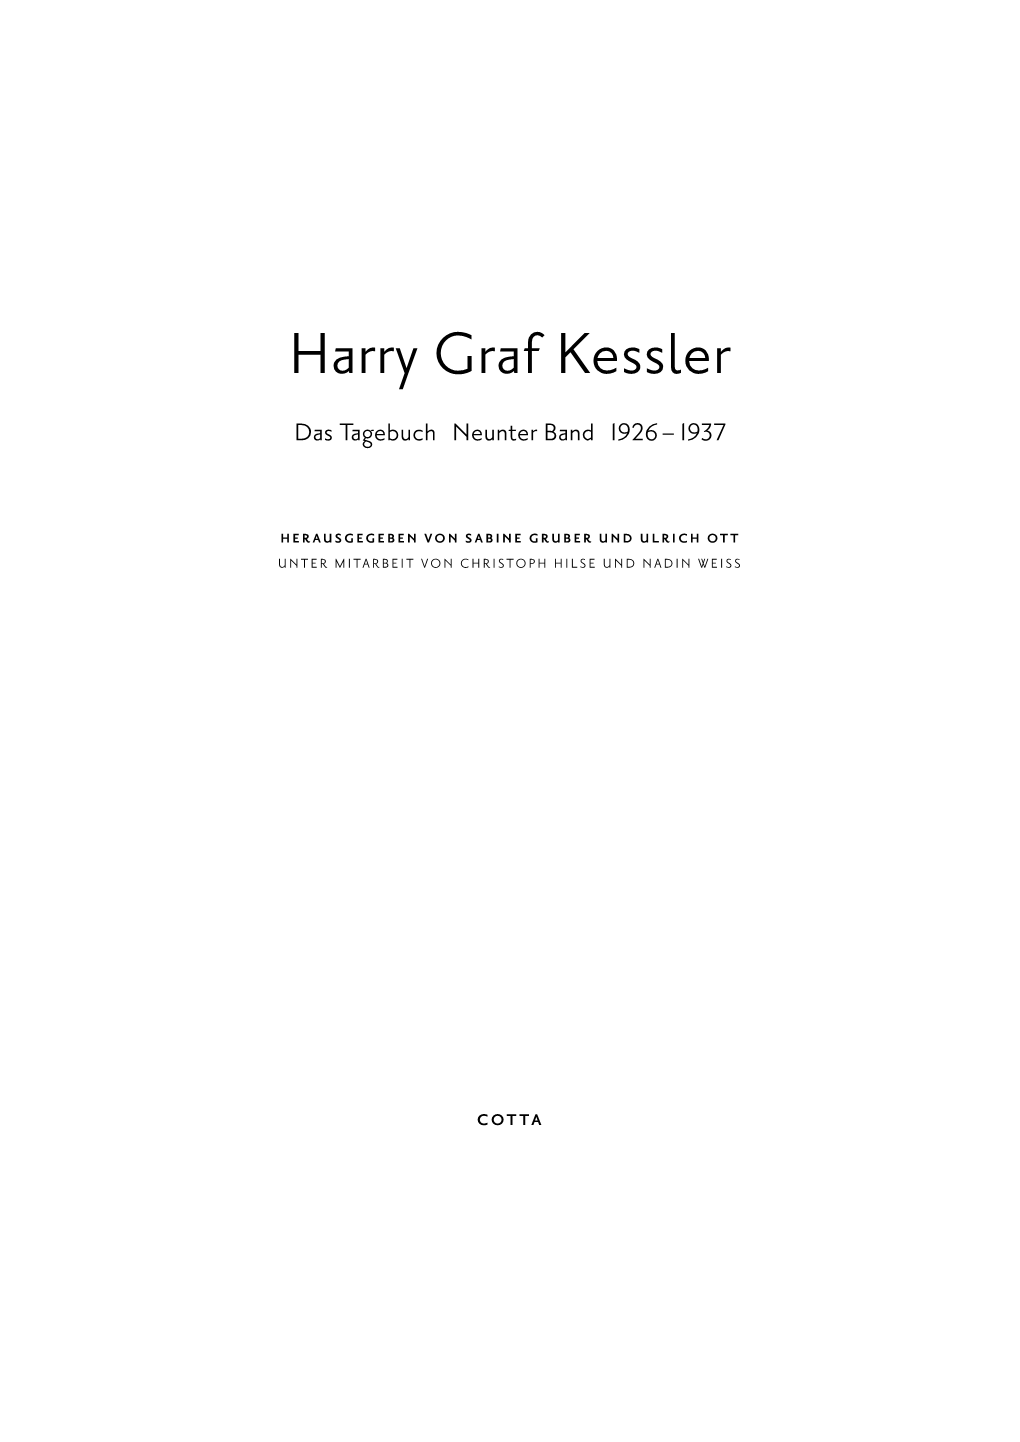 Harry Graf Kessler Das Tagebuch Neunter Band 1926 – 1937